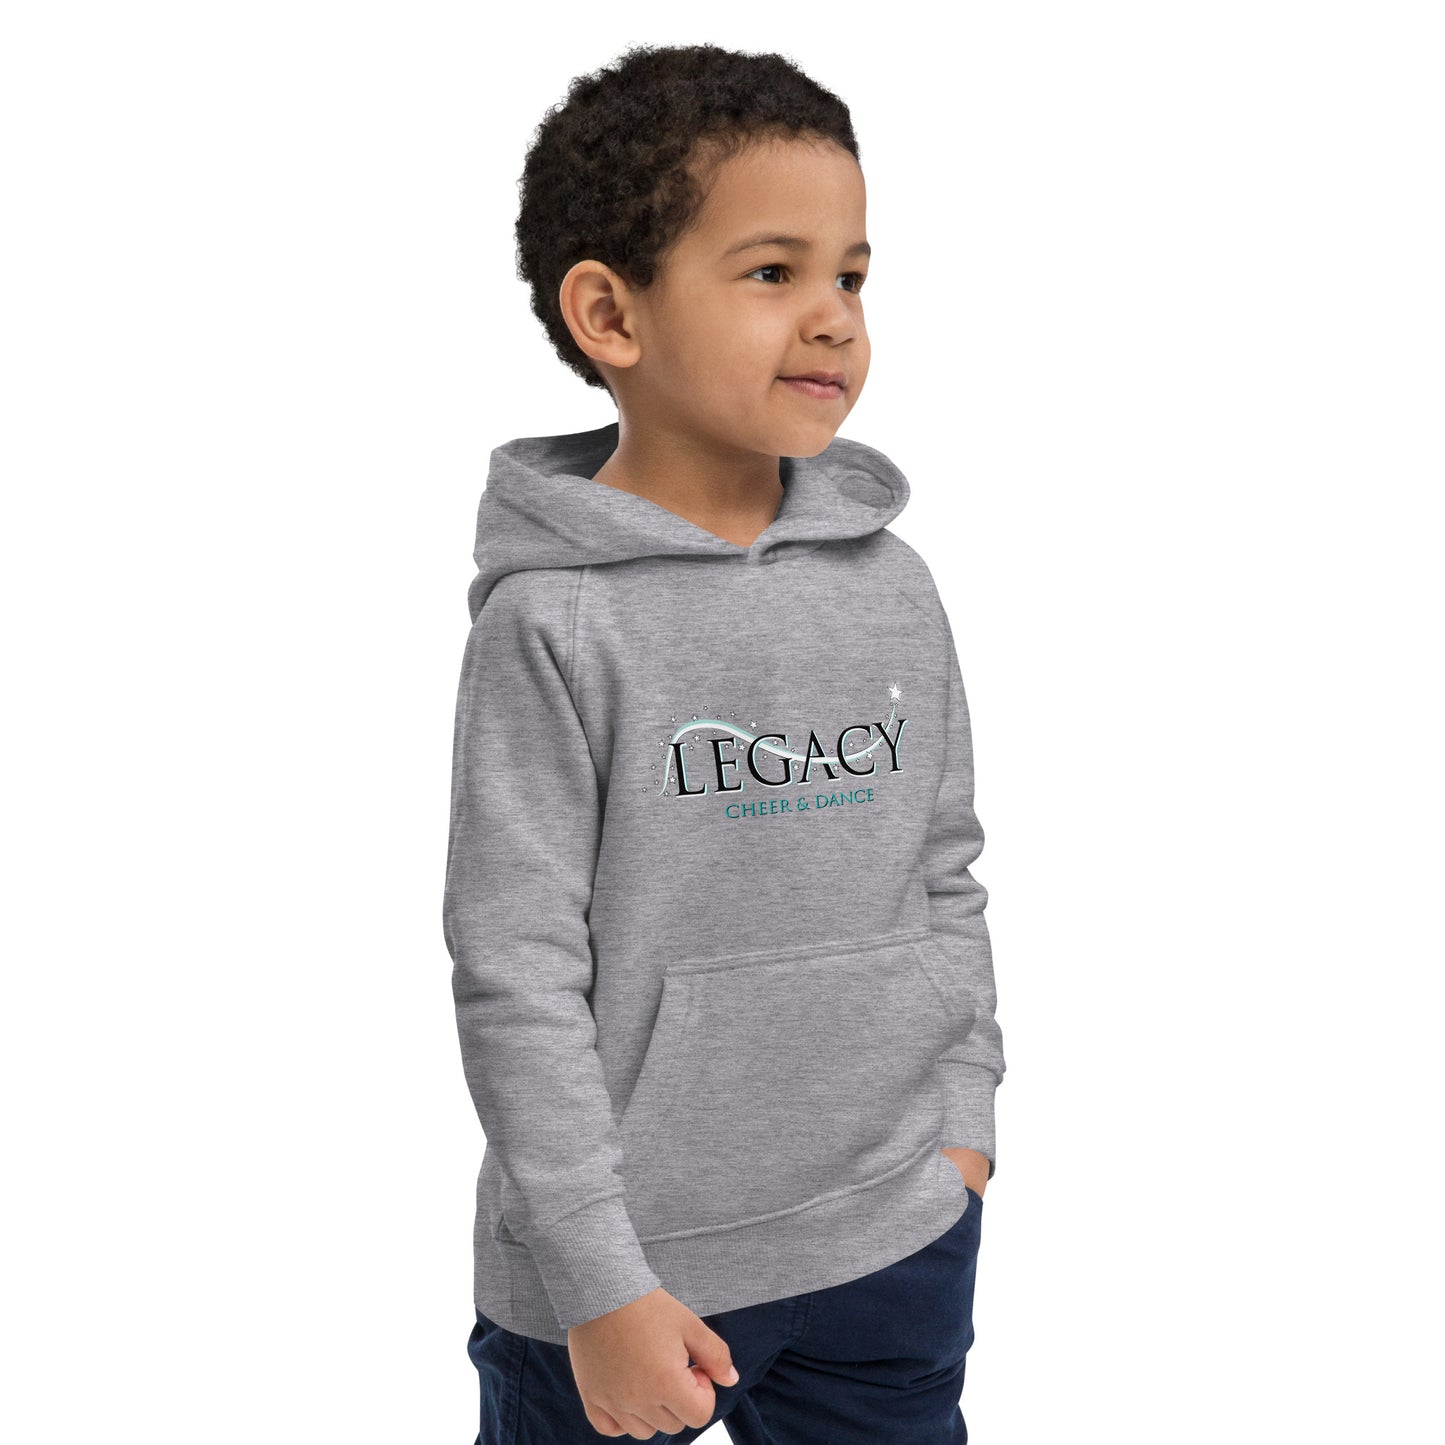 Legacy: Kids Warm Leader for Life Hoodie